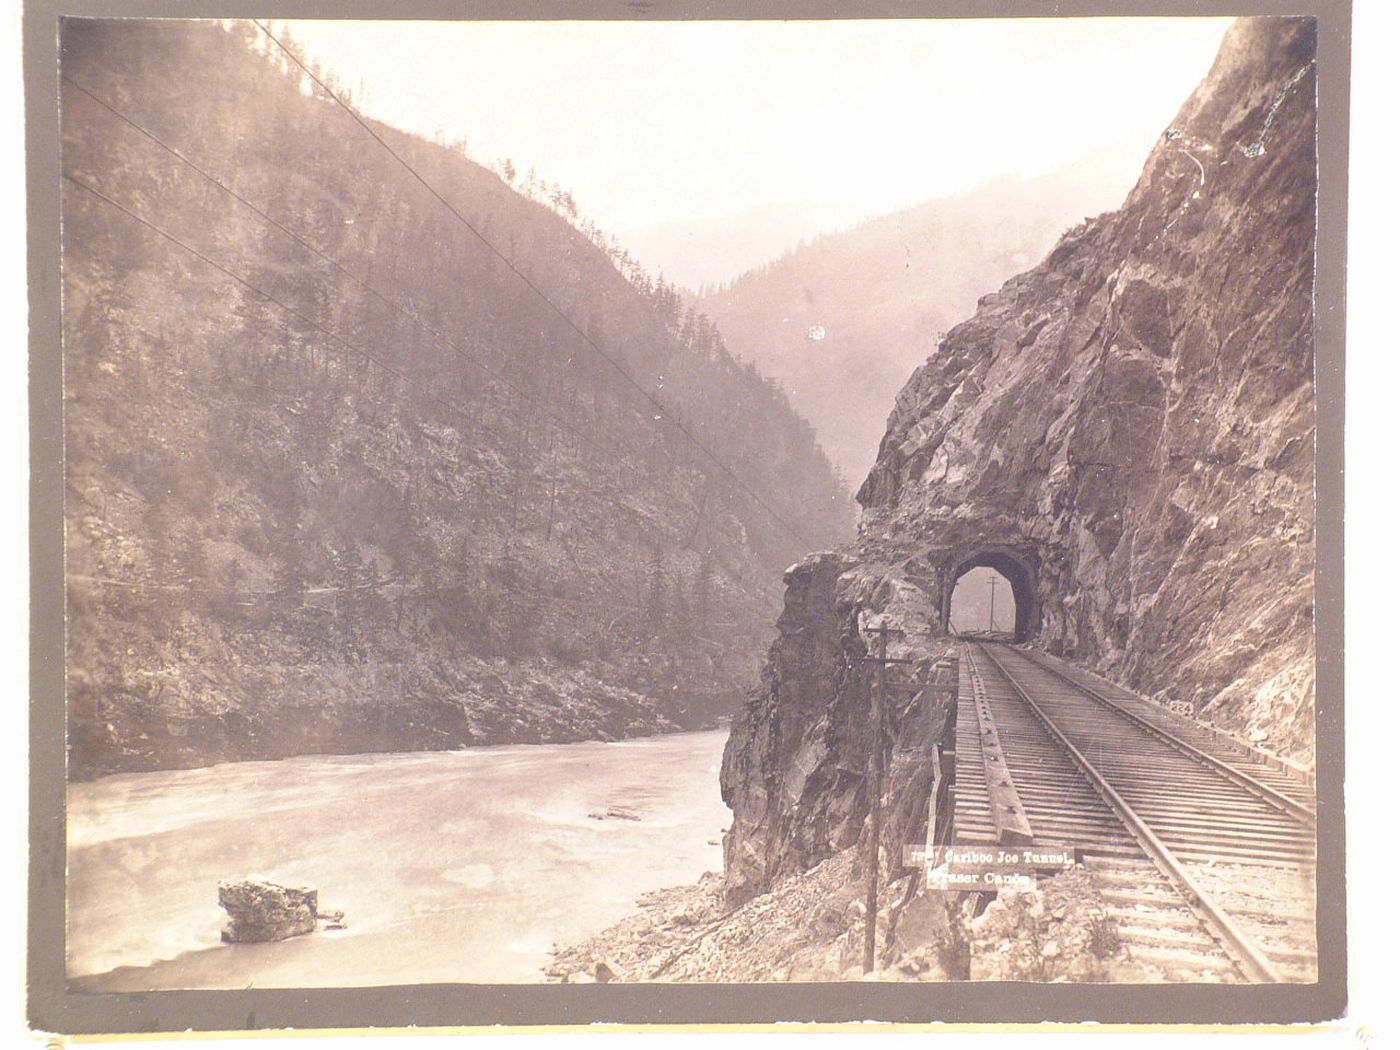 View of The Cariboo Joe Tunnel, Fraser Canyon, British Columbia, Canada